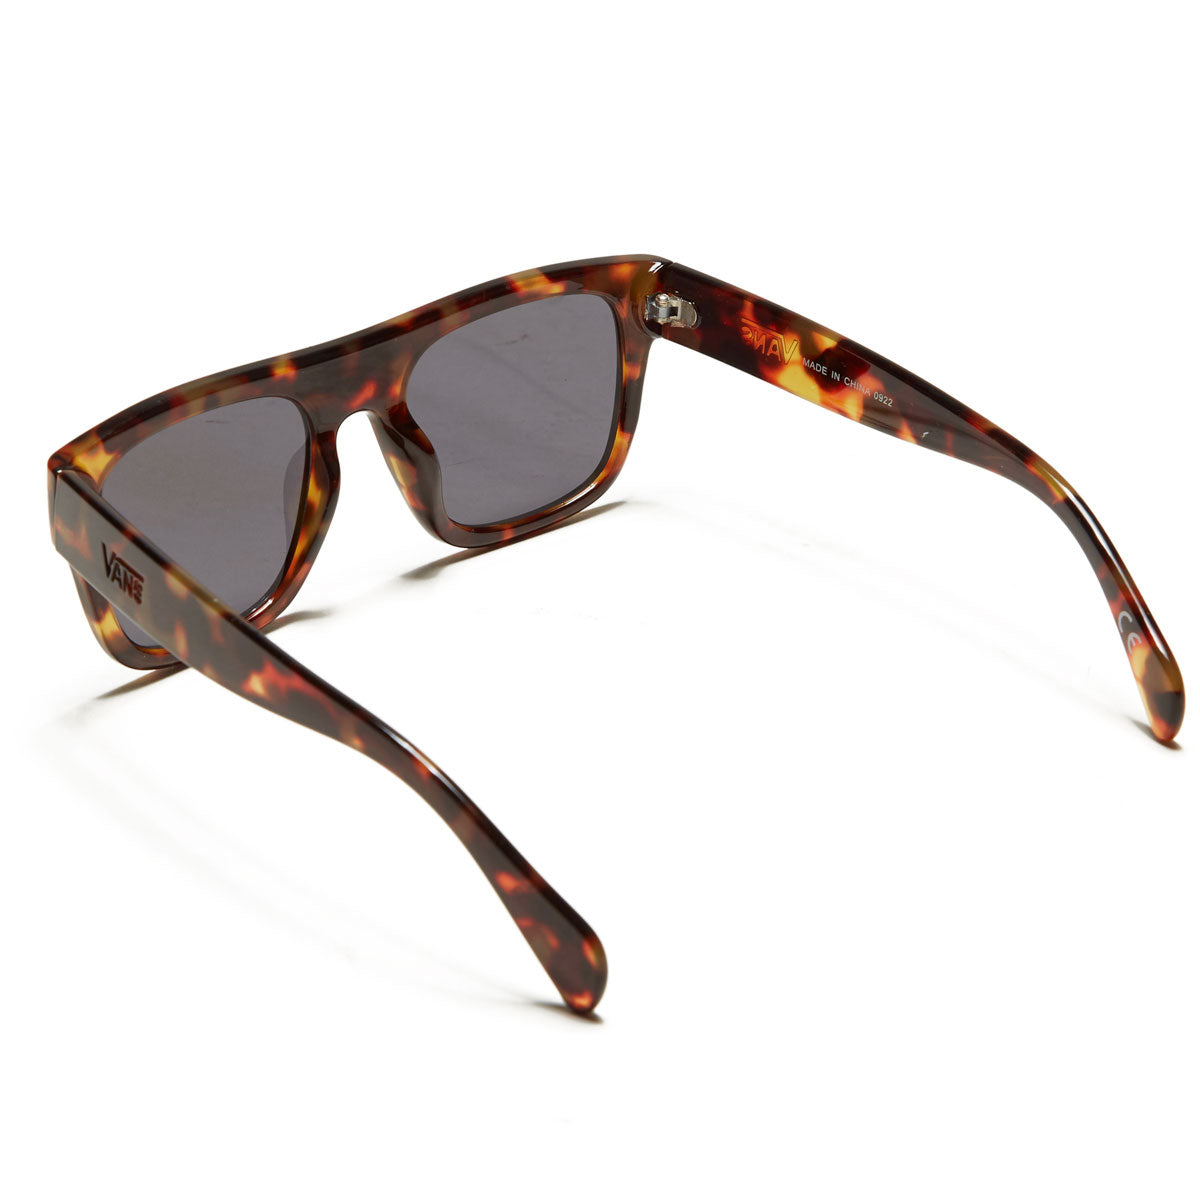 Vans Squared Off Sunglasses - Cheetah Tortoise image 2